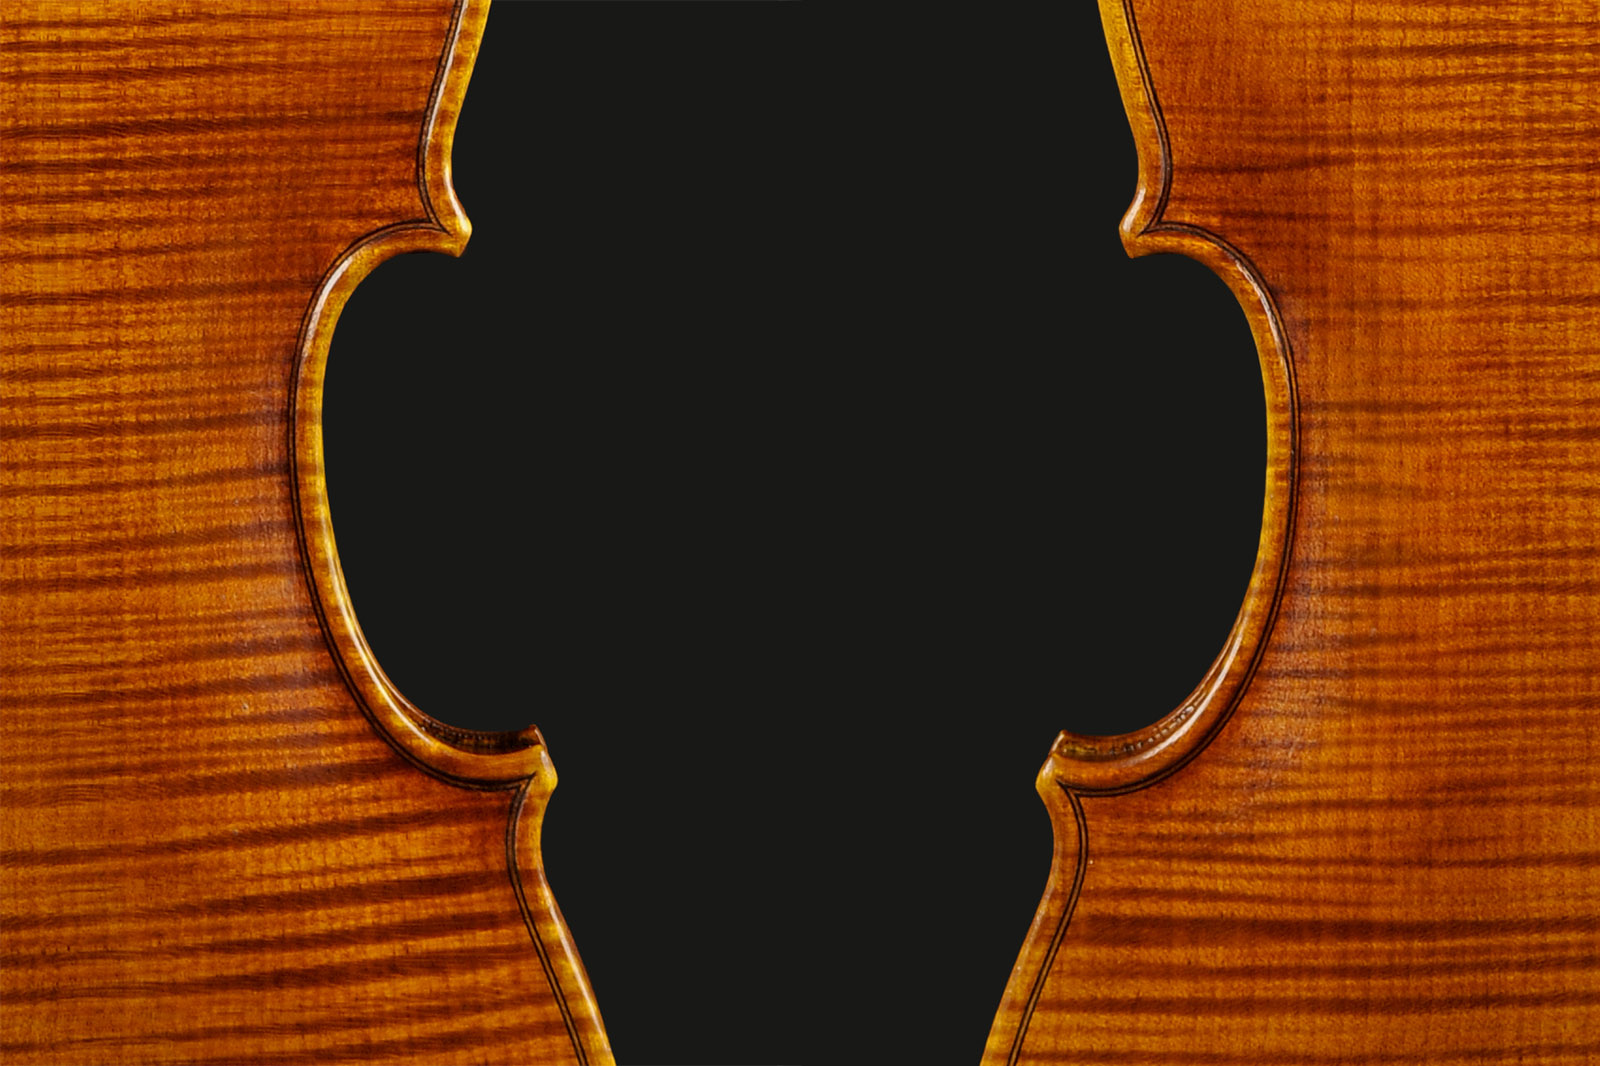 Antonio Stradivari Cremona 1715 “San Pietro“ - Image 4